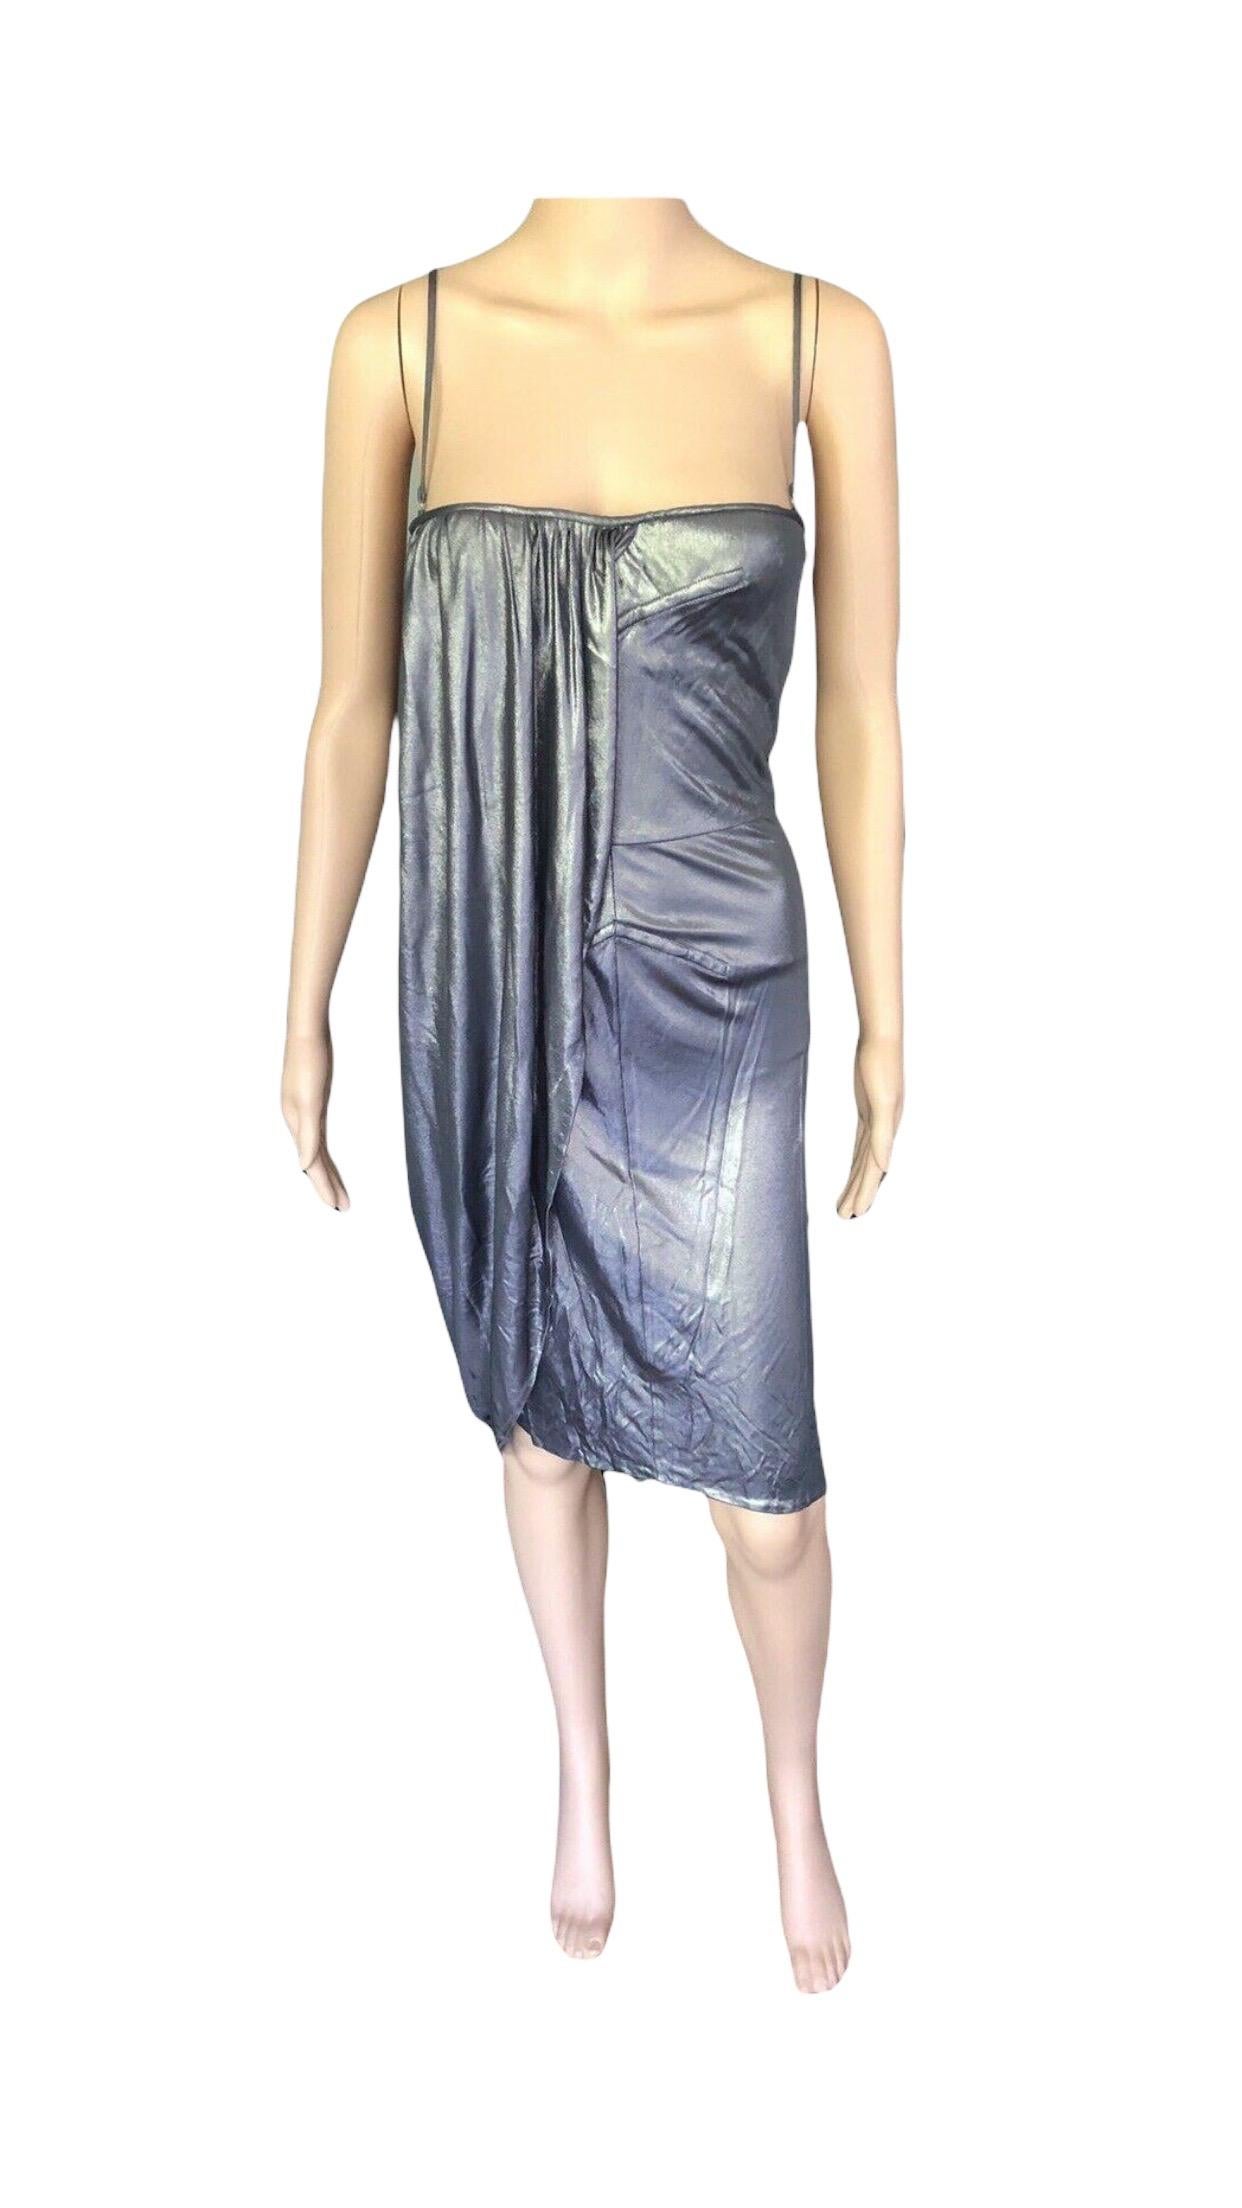 Christian Dior Resort 2007 Runway Metallic Draped Dress For Sale 2